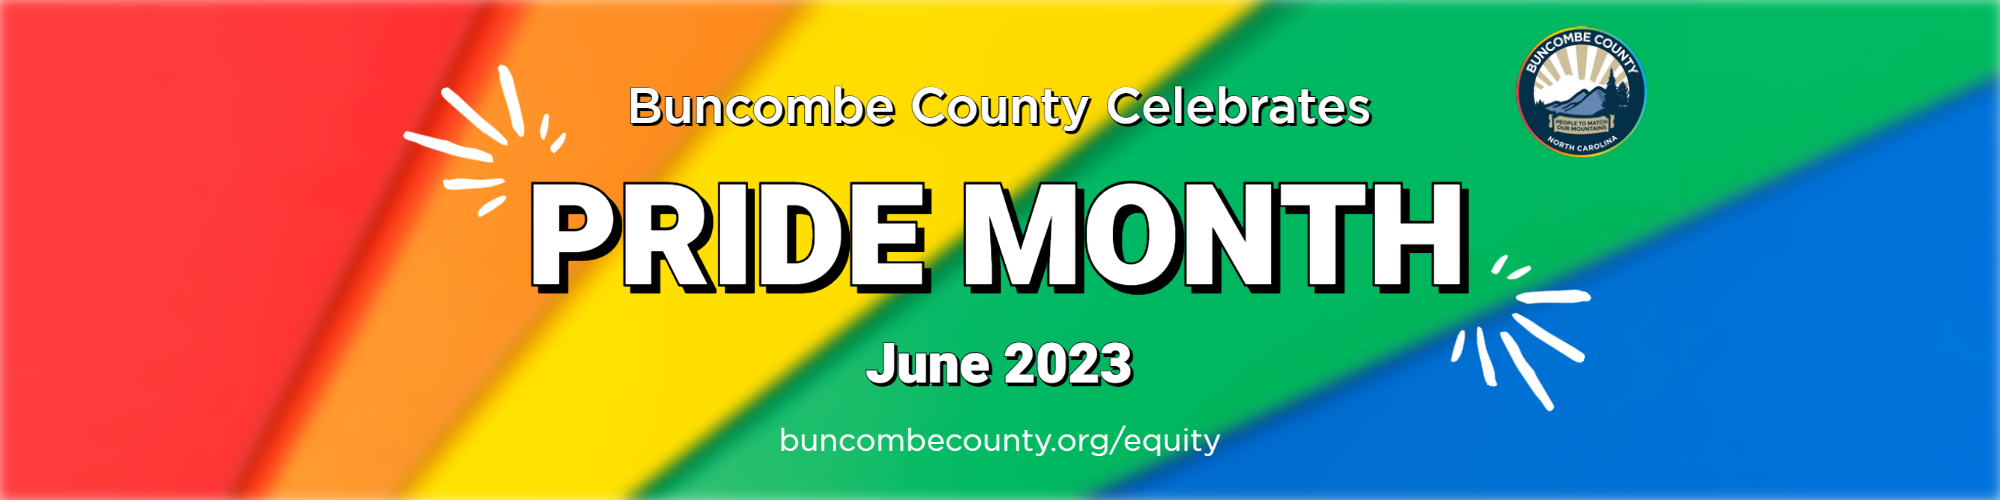 Buncombe County Celebrates Pride Month in June 2023